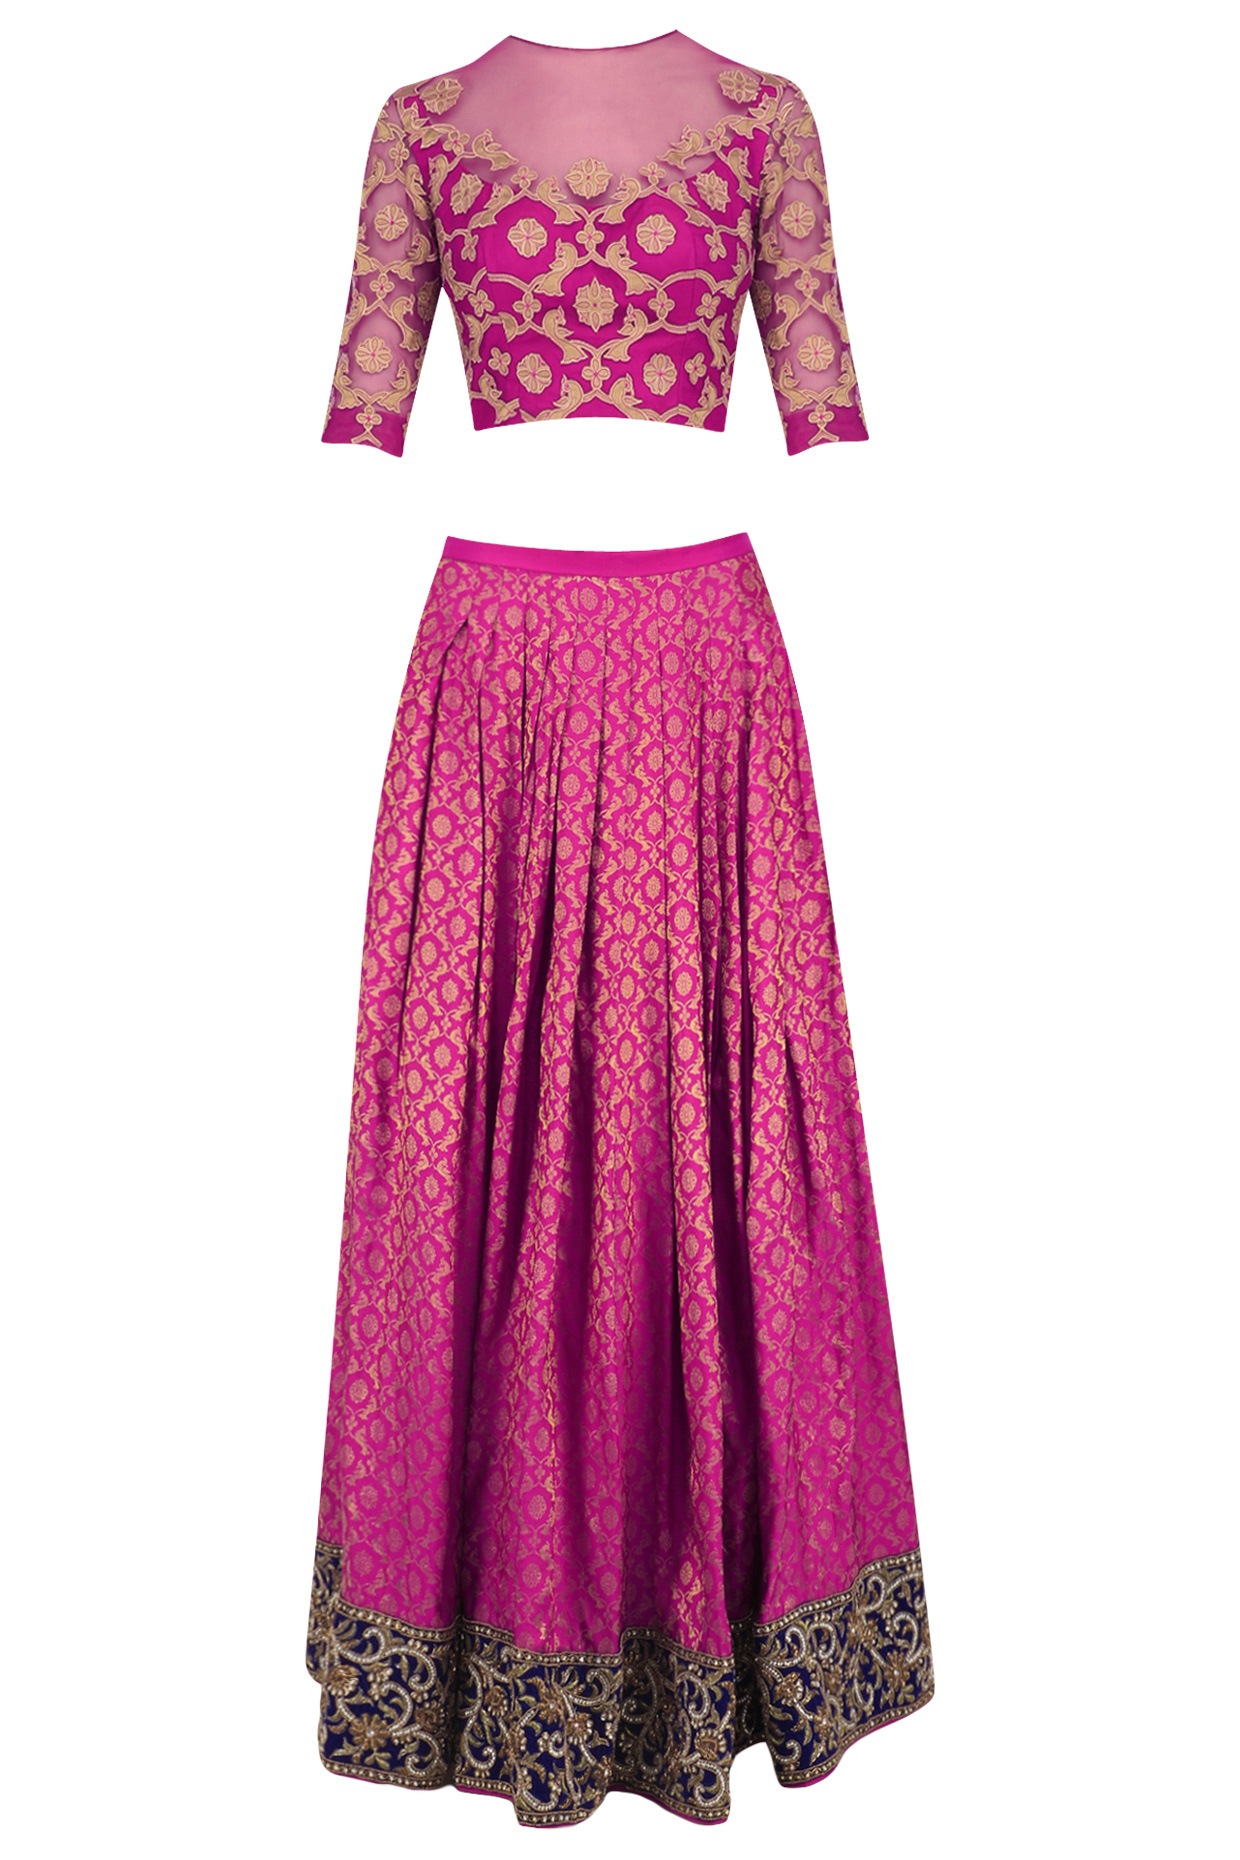 Buy Green Skirts & Ghagras for Women by Studio Shringaar Online | Ajio.com